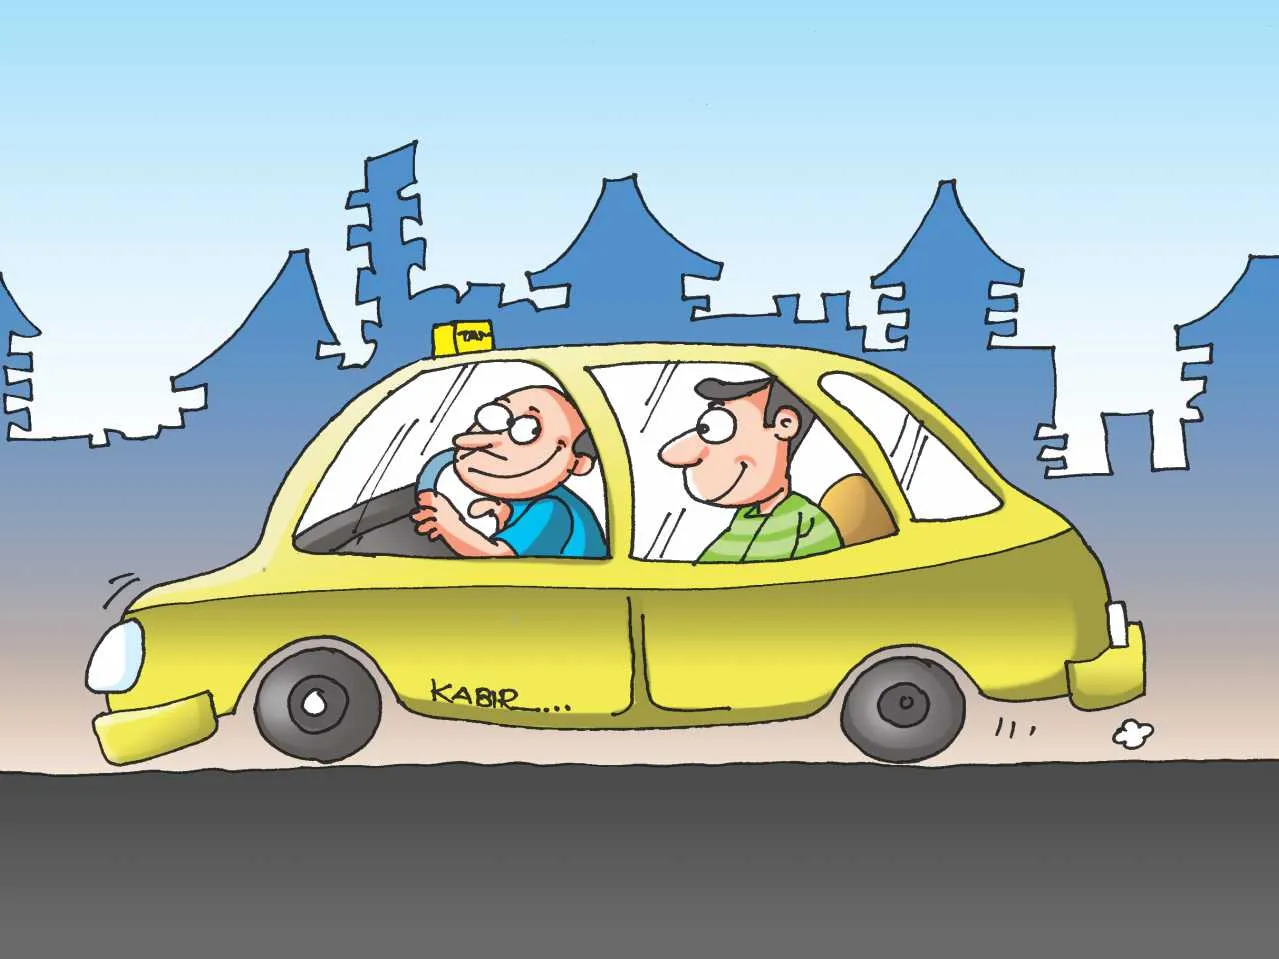 Man in taxi cartoon image